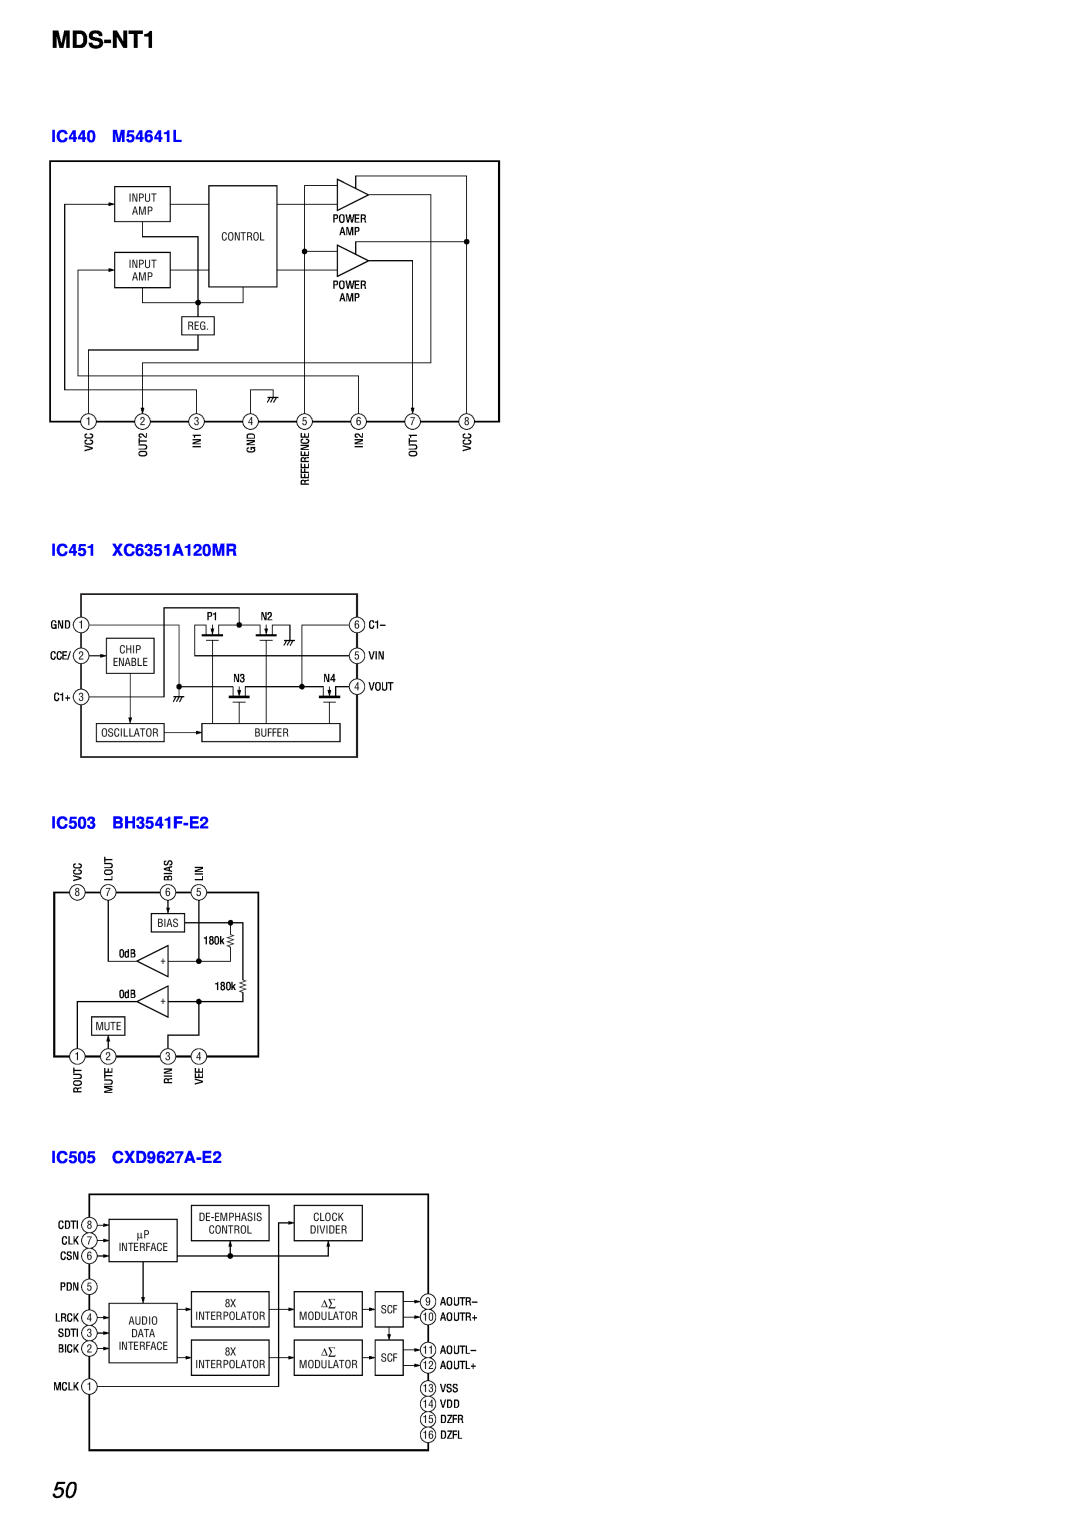 Sony MDS-NT1 service manual IC440, M54641L, IC451, XC6351A120MR, IC503, BH3541F-E2, IC505, CXD9627A-E2 